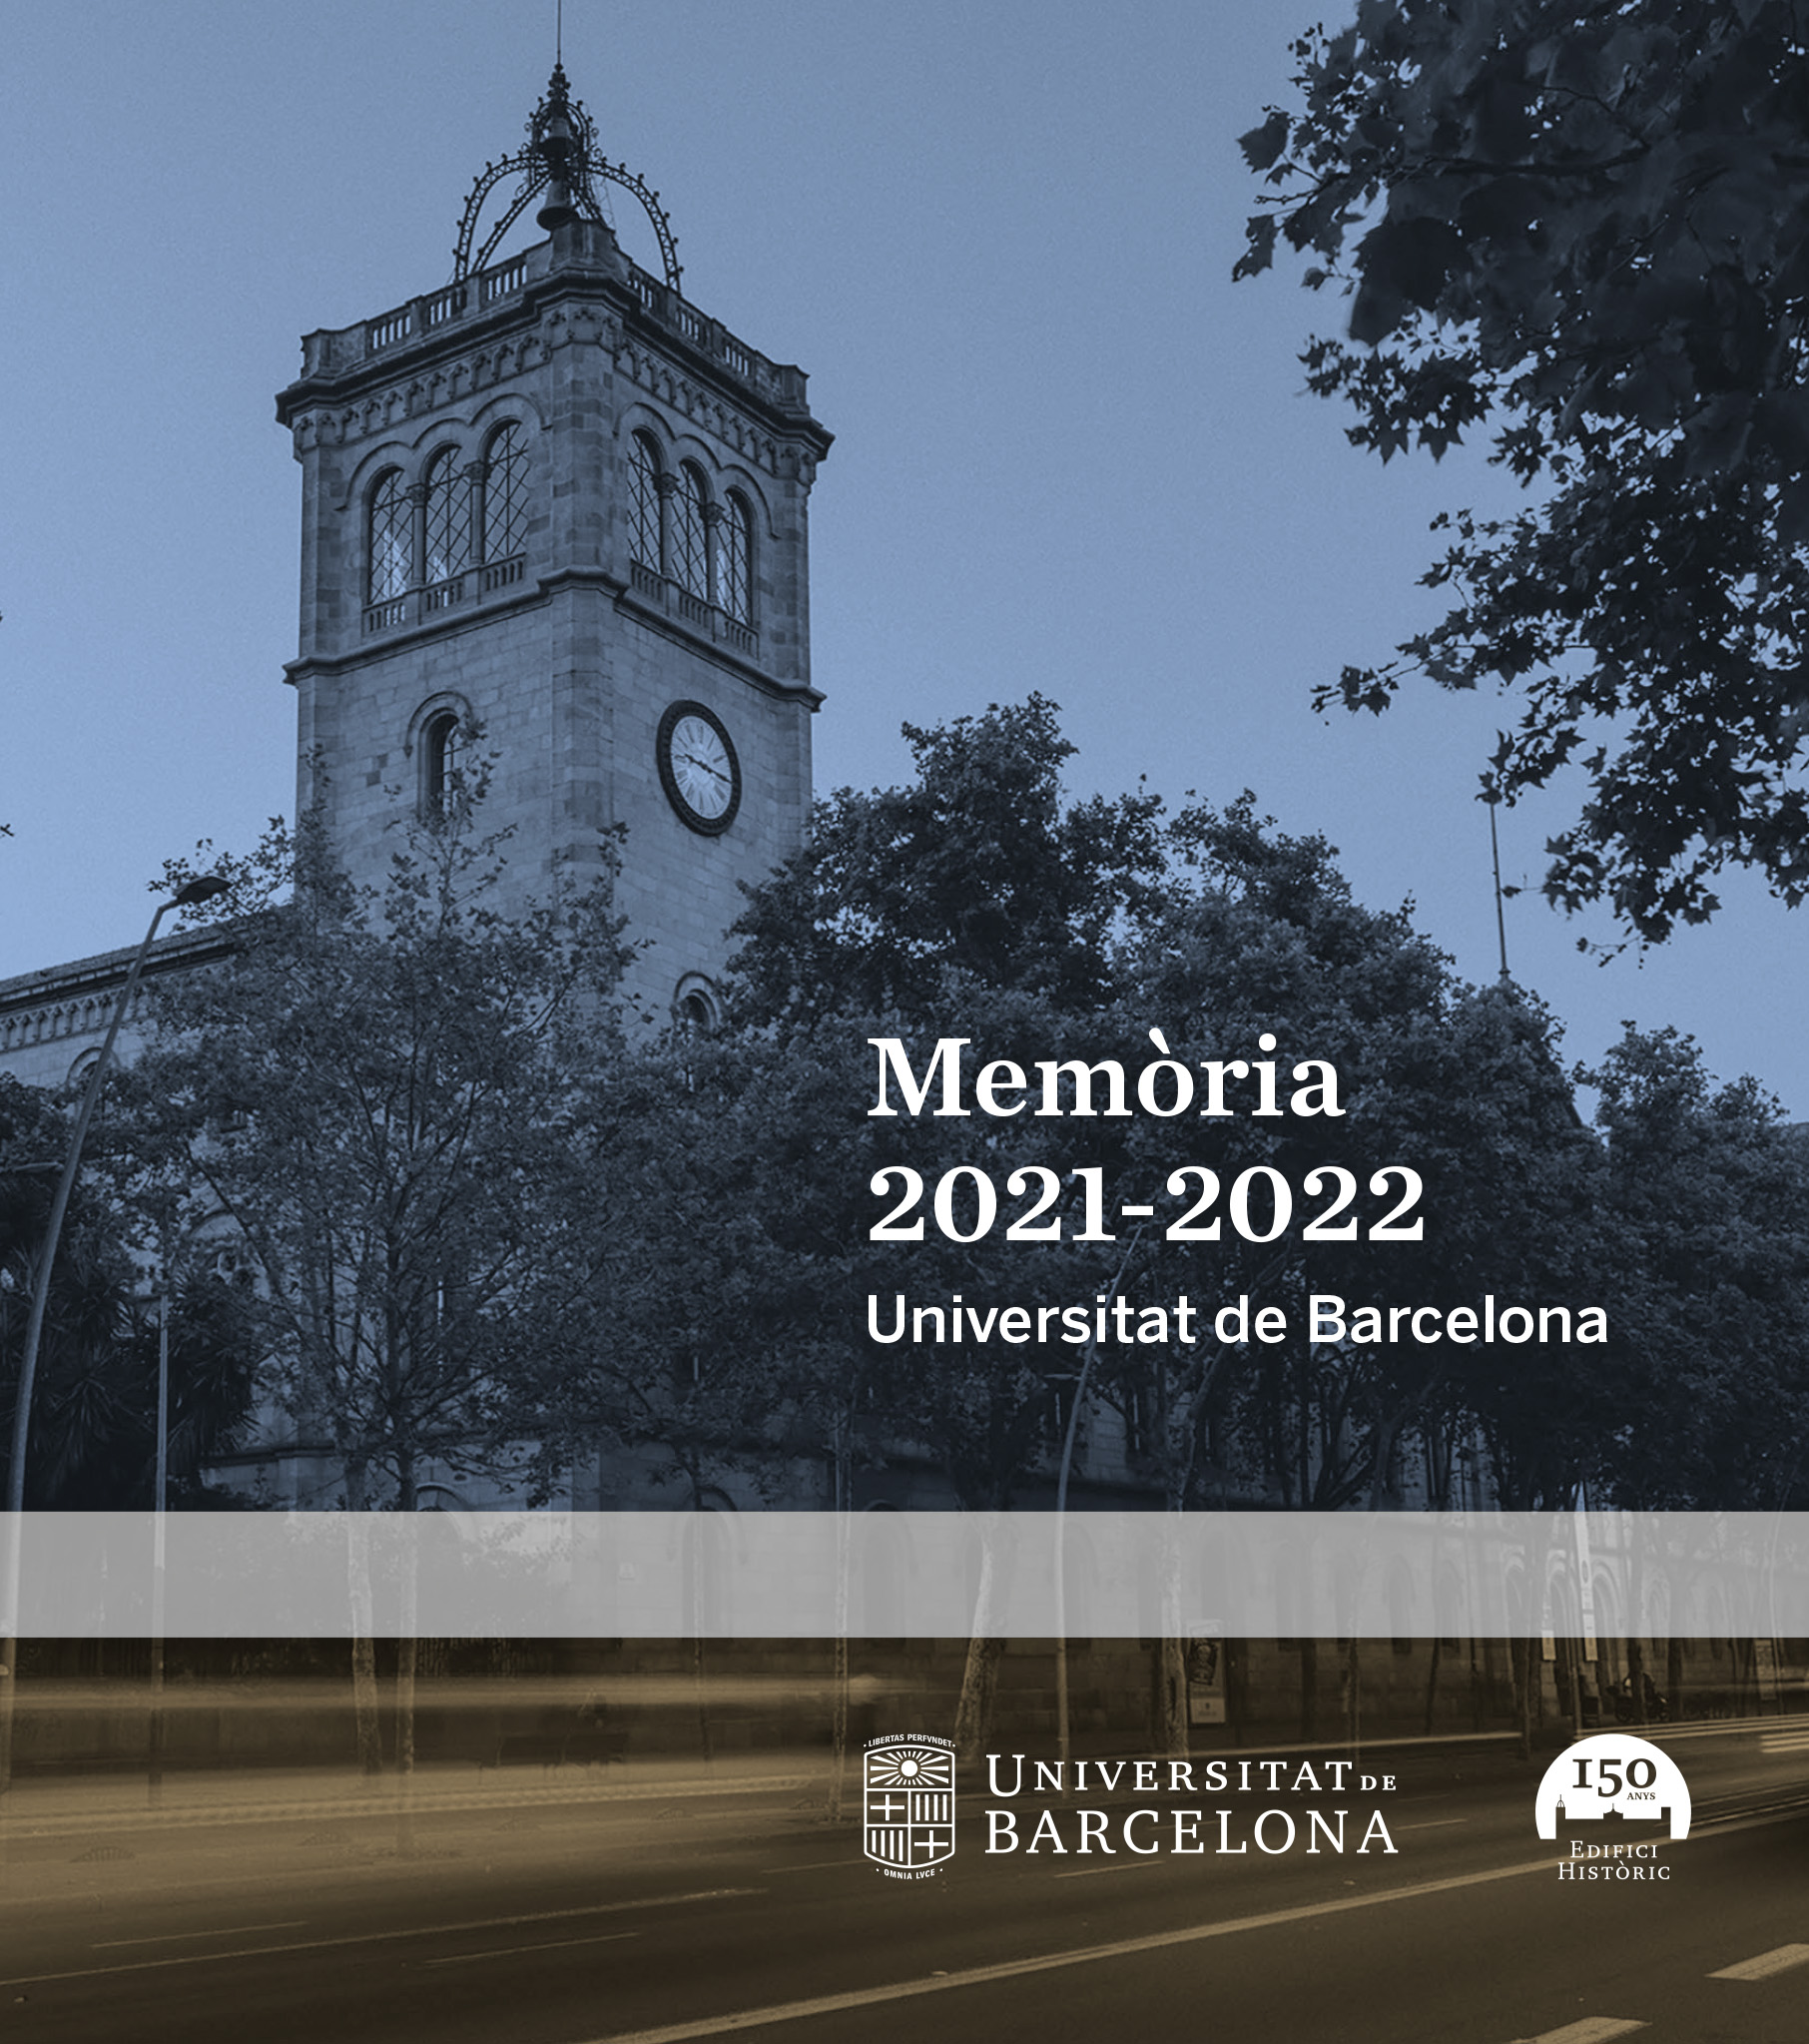 The Report 2021-2022 starts with a chapter titled “La Universitat de Barcelona avui”